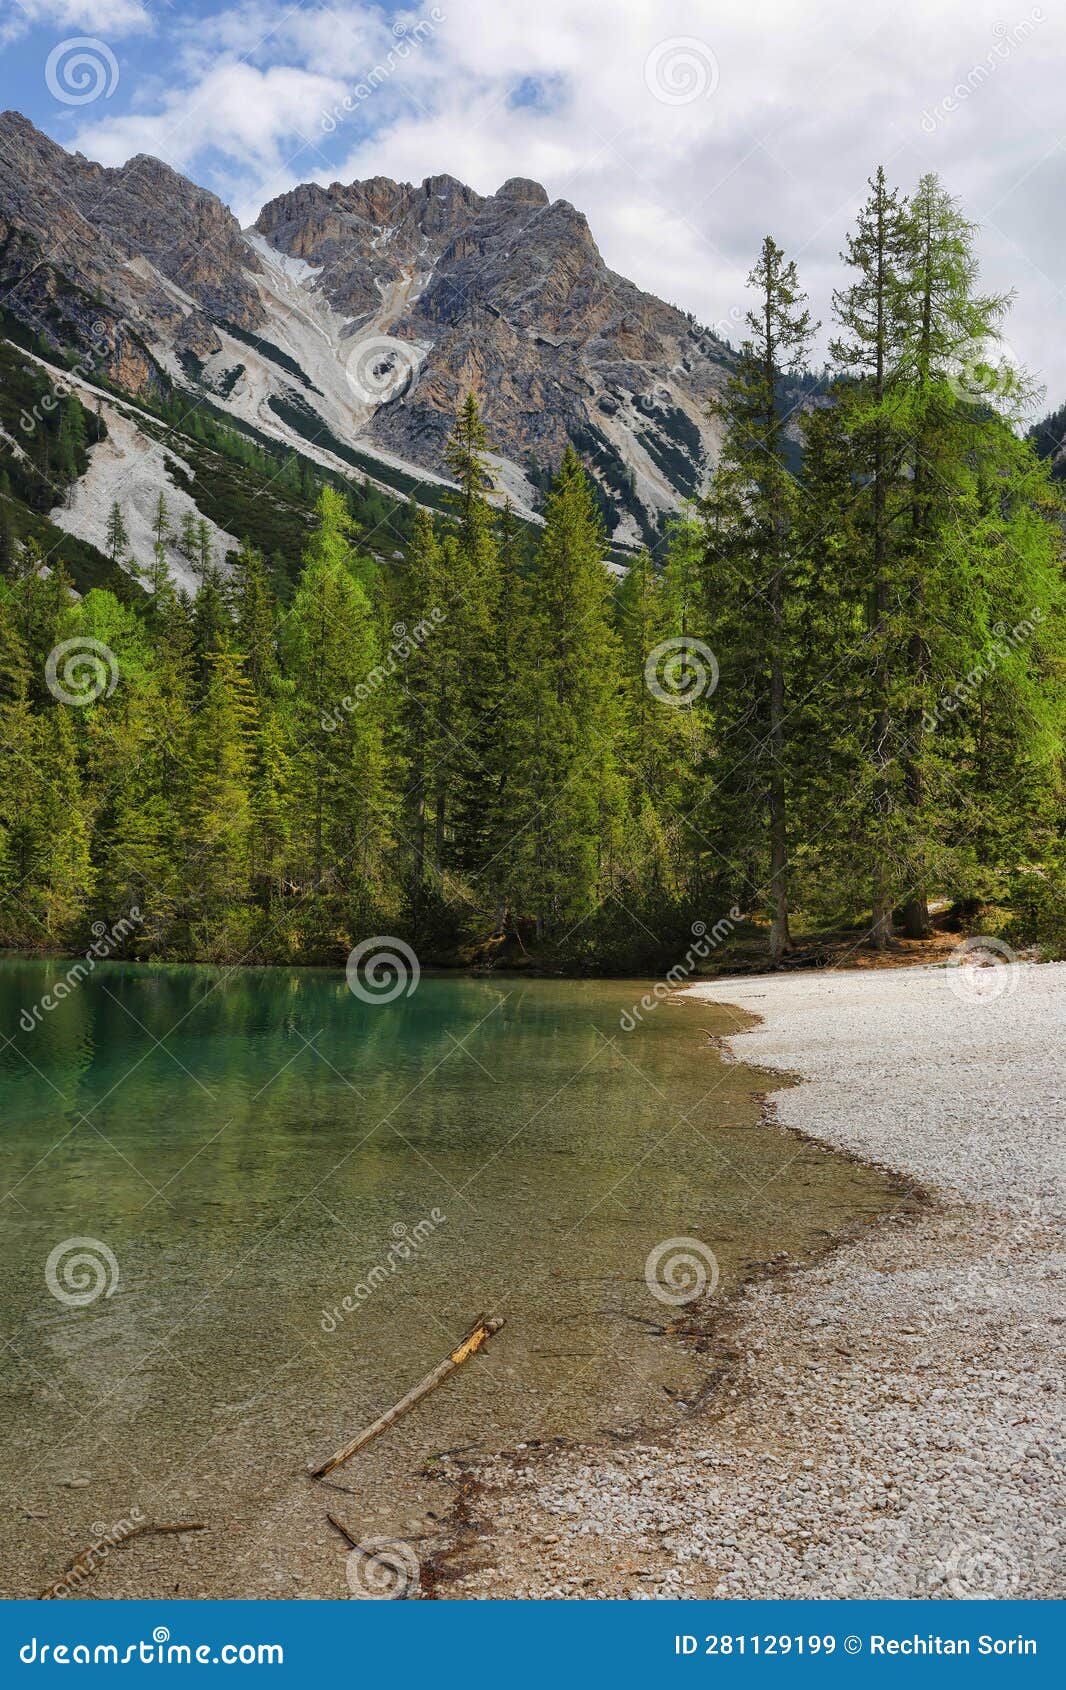 croda del becco mountain and lago di braies. dolomites, northern italy, europe